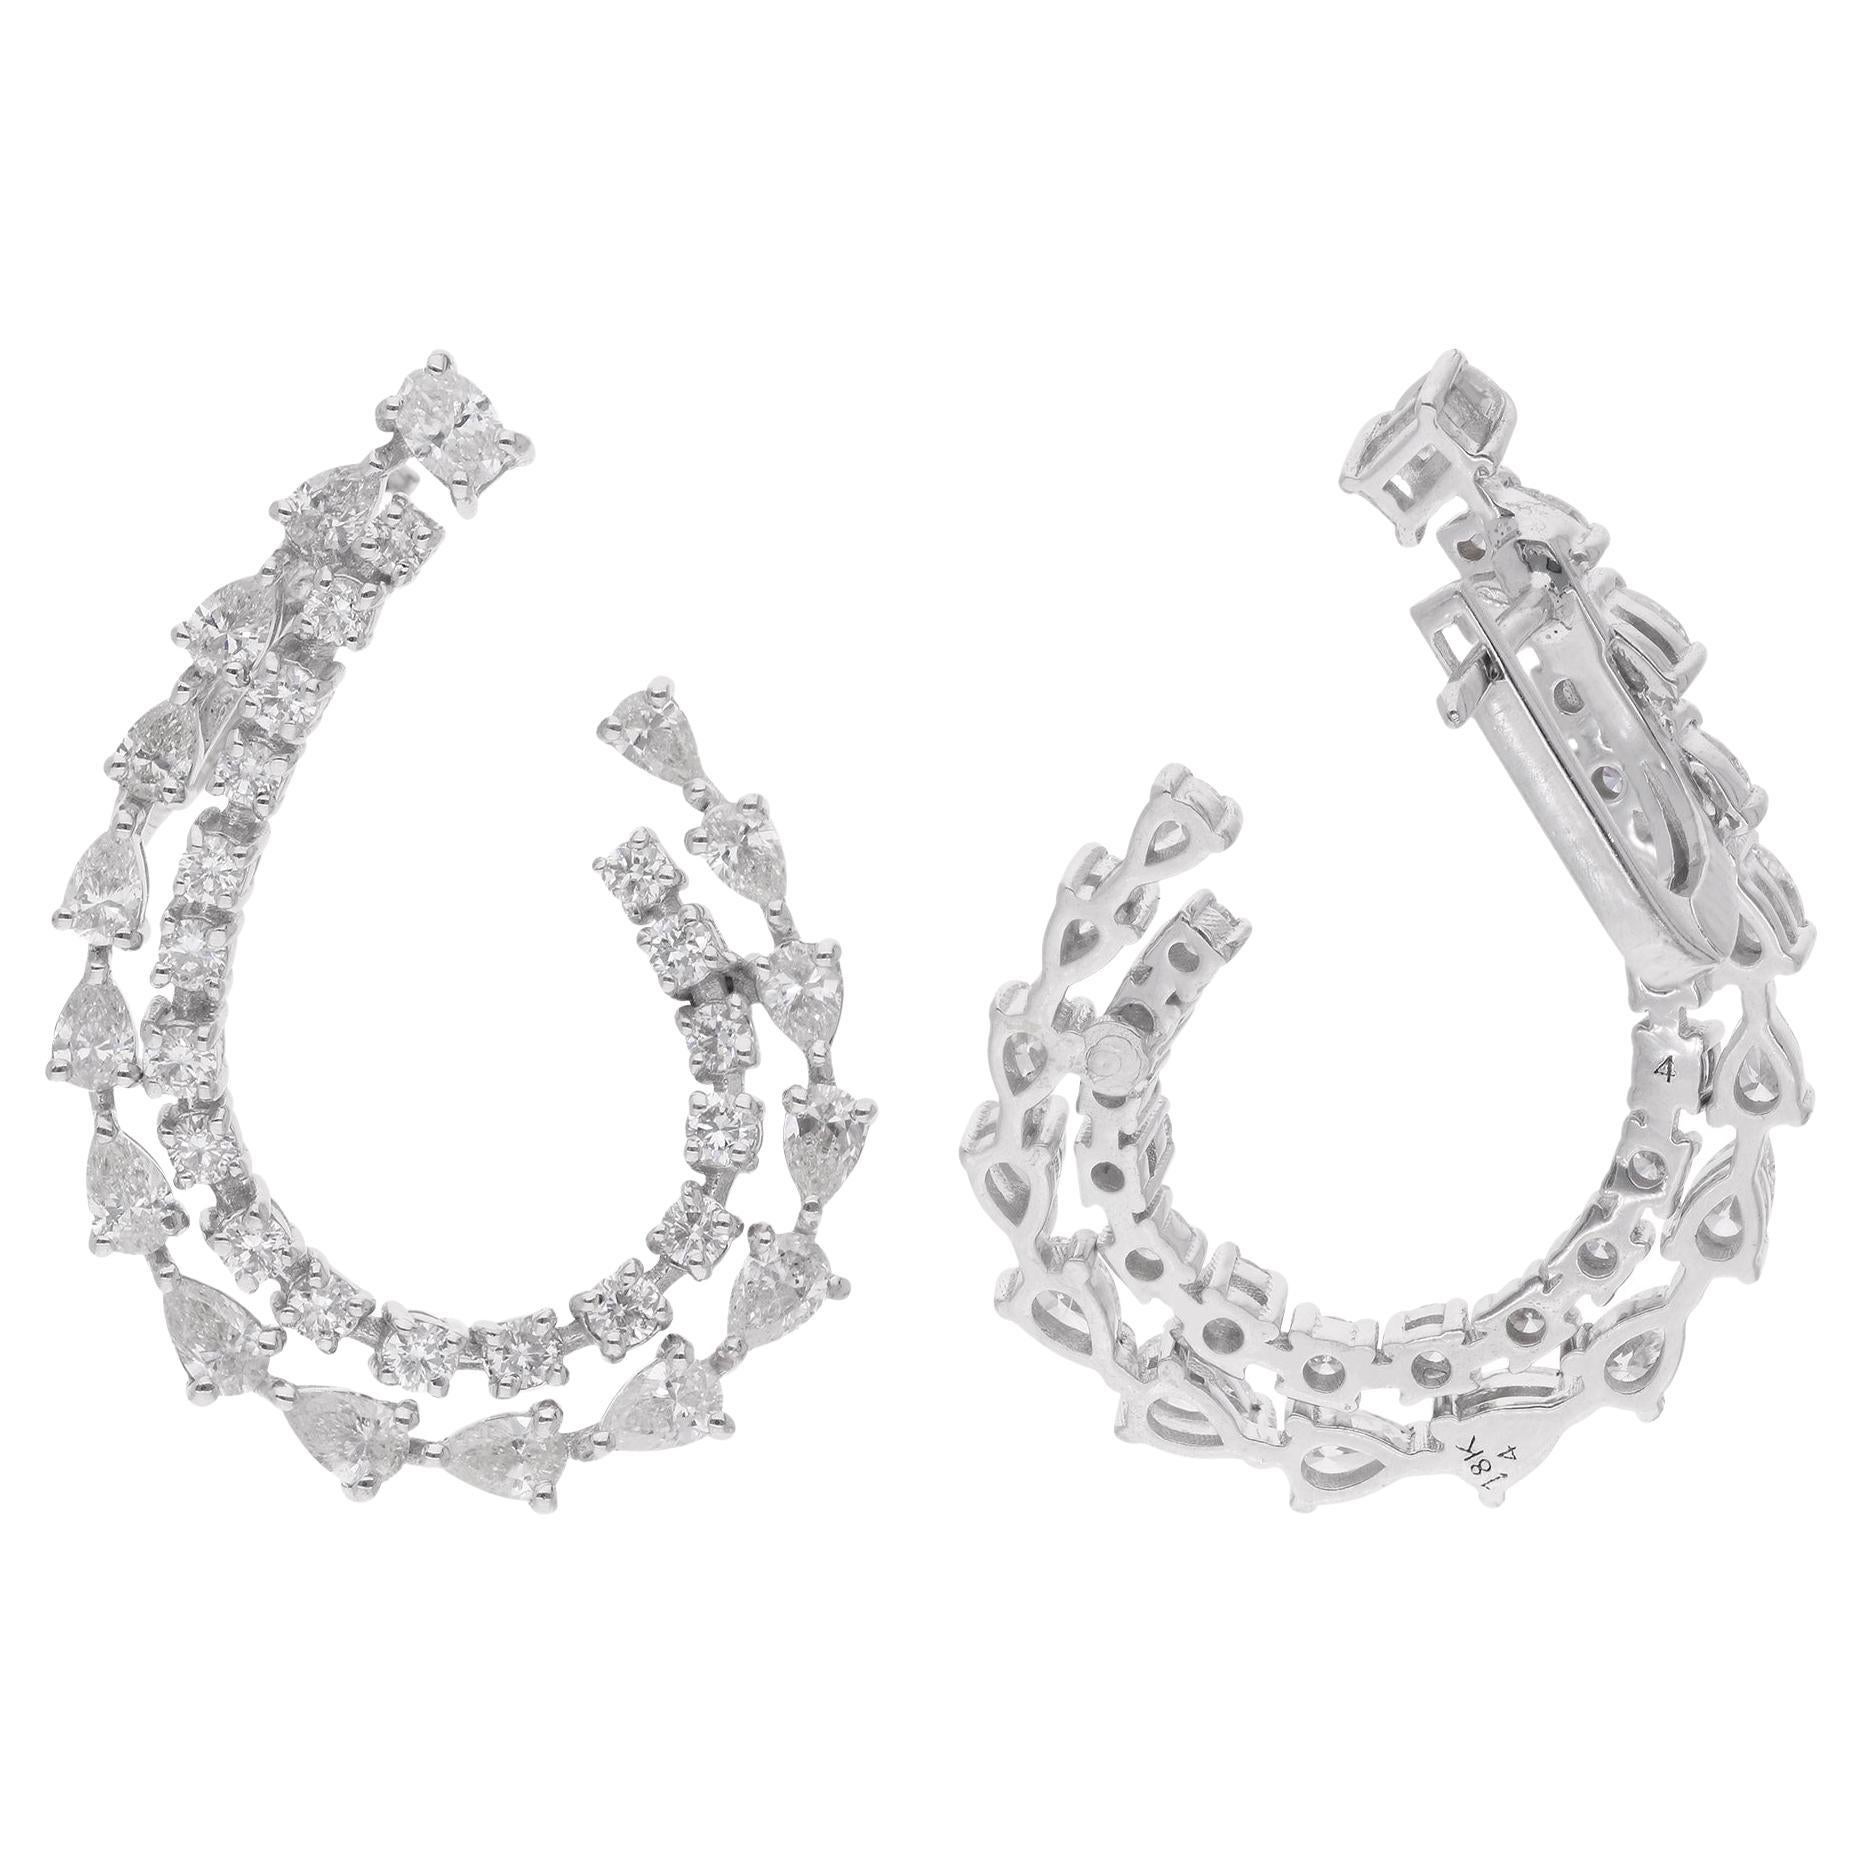 2.92 Carat Pear & Round Diamond Earrings 18 Karat White Gold Handmade Jewelry For Sale